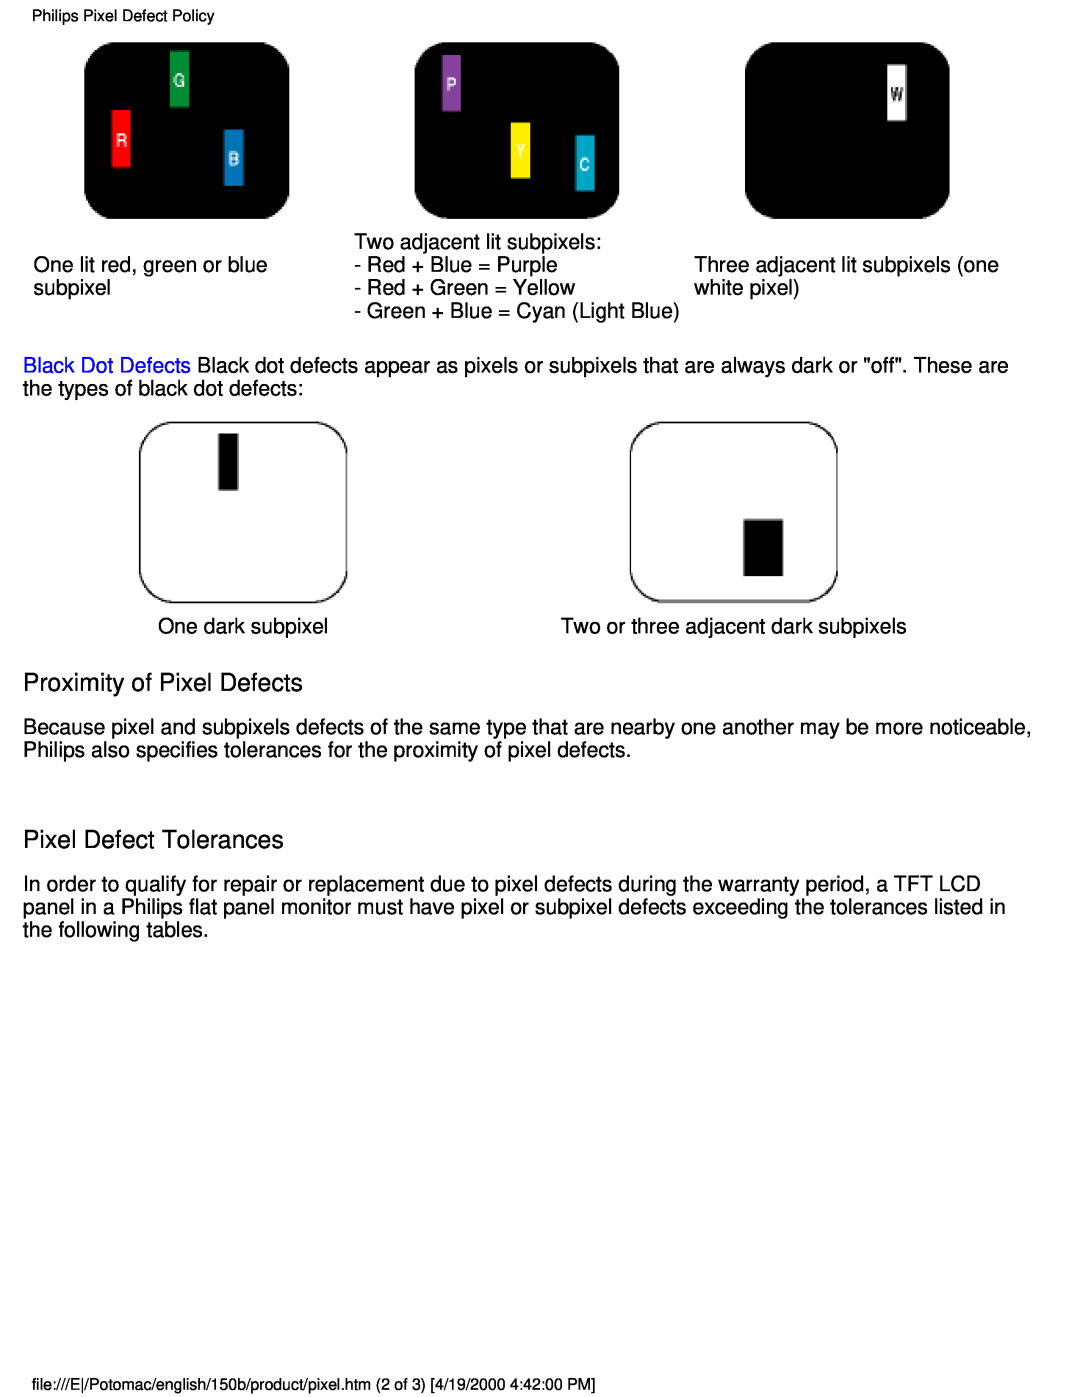 Philips 150B user manual Proximity of Pixel Defects, Pixel Defect Tolerances 